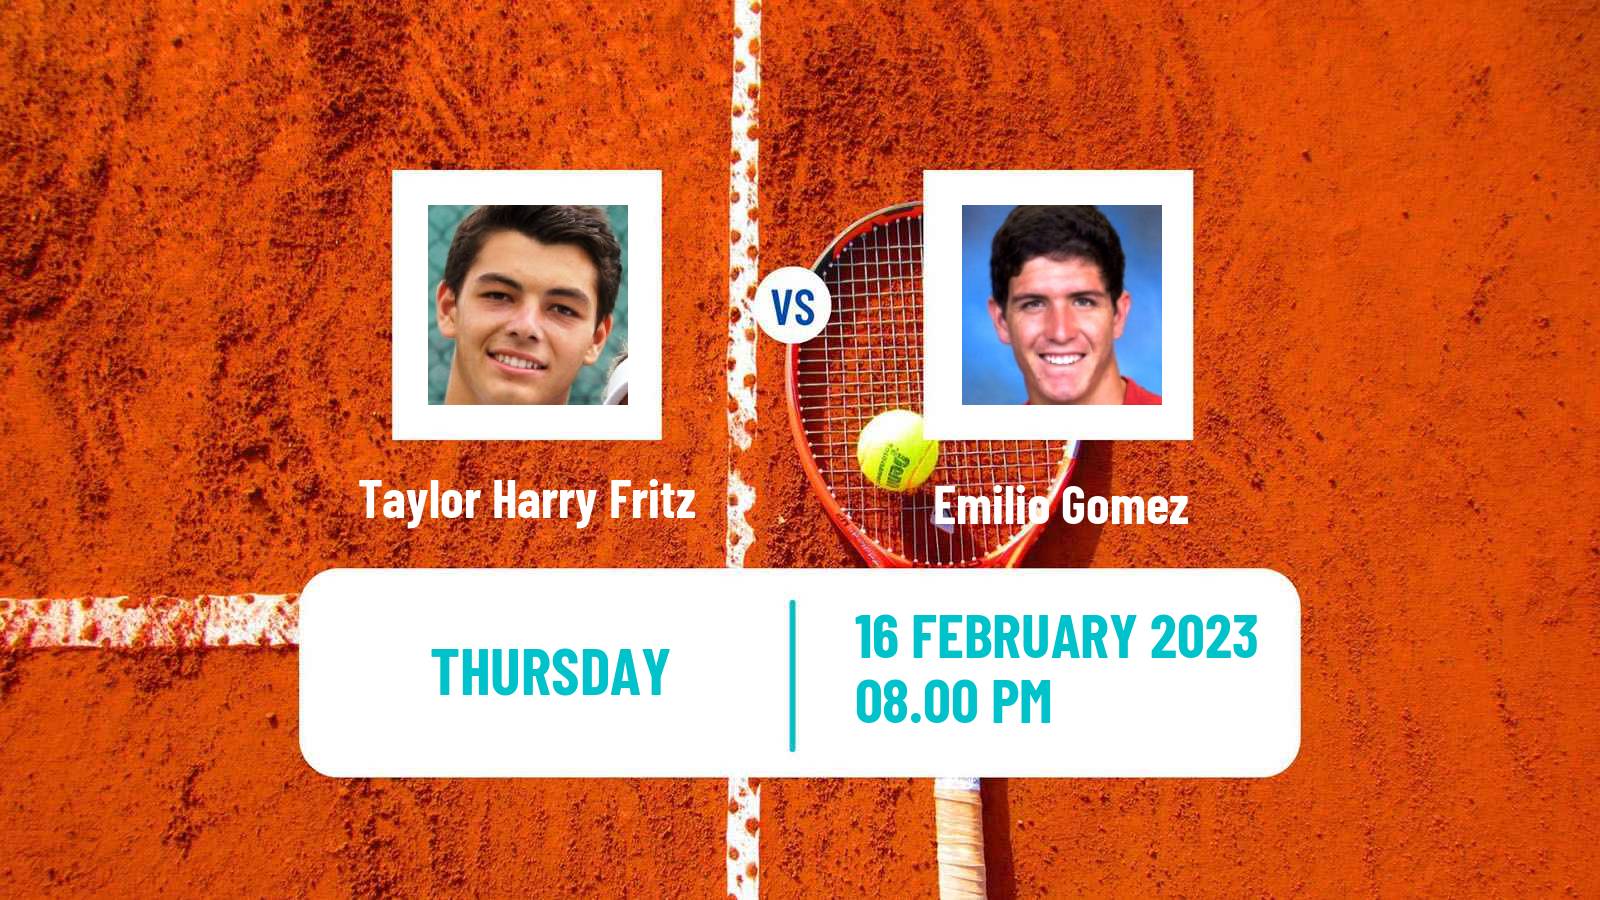 Tennis ATP Delray Beach Taylor Harry Fritz - Emilio Gomez